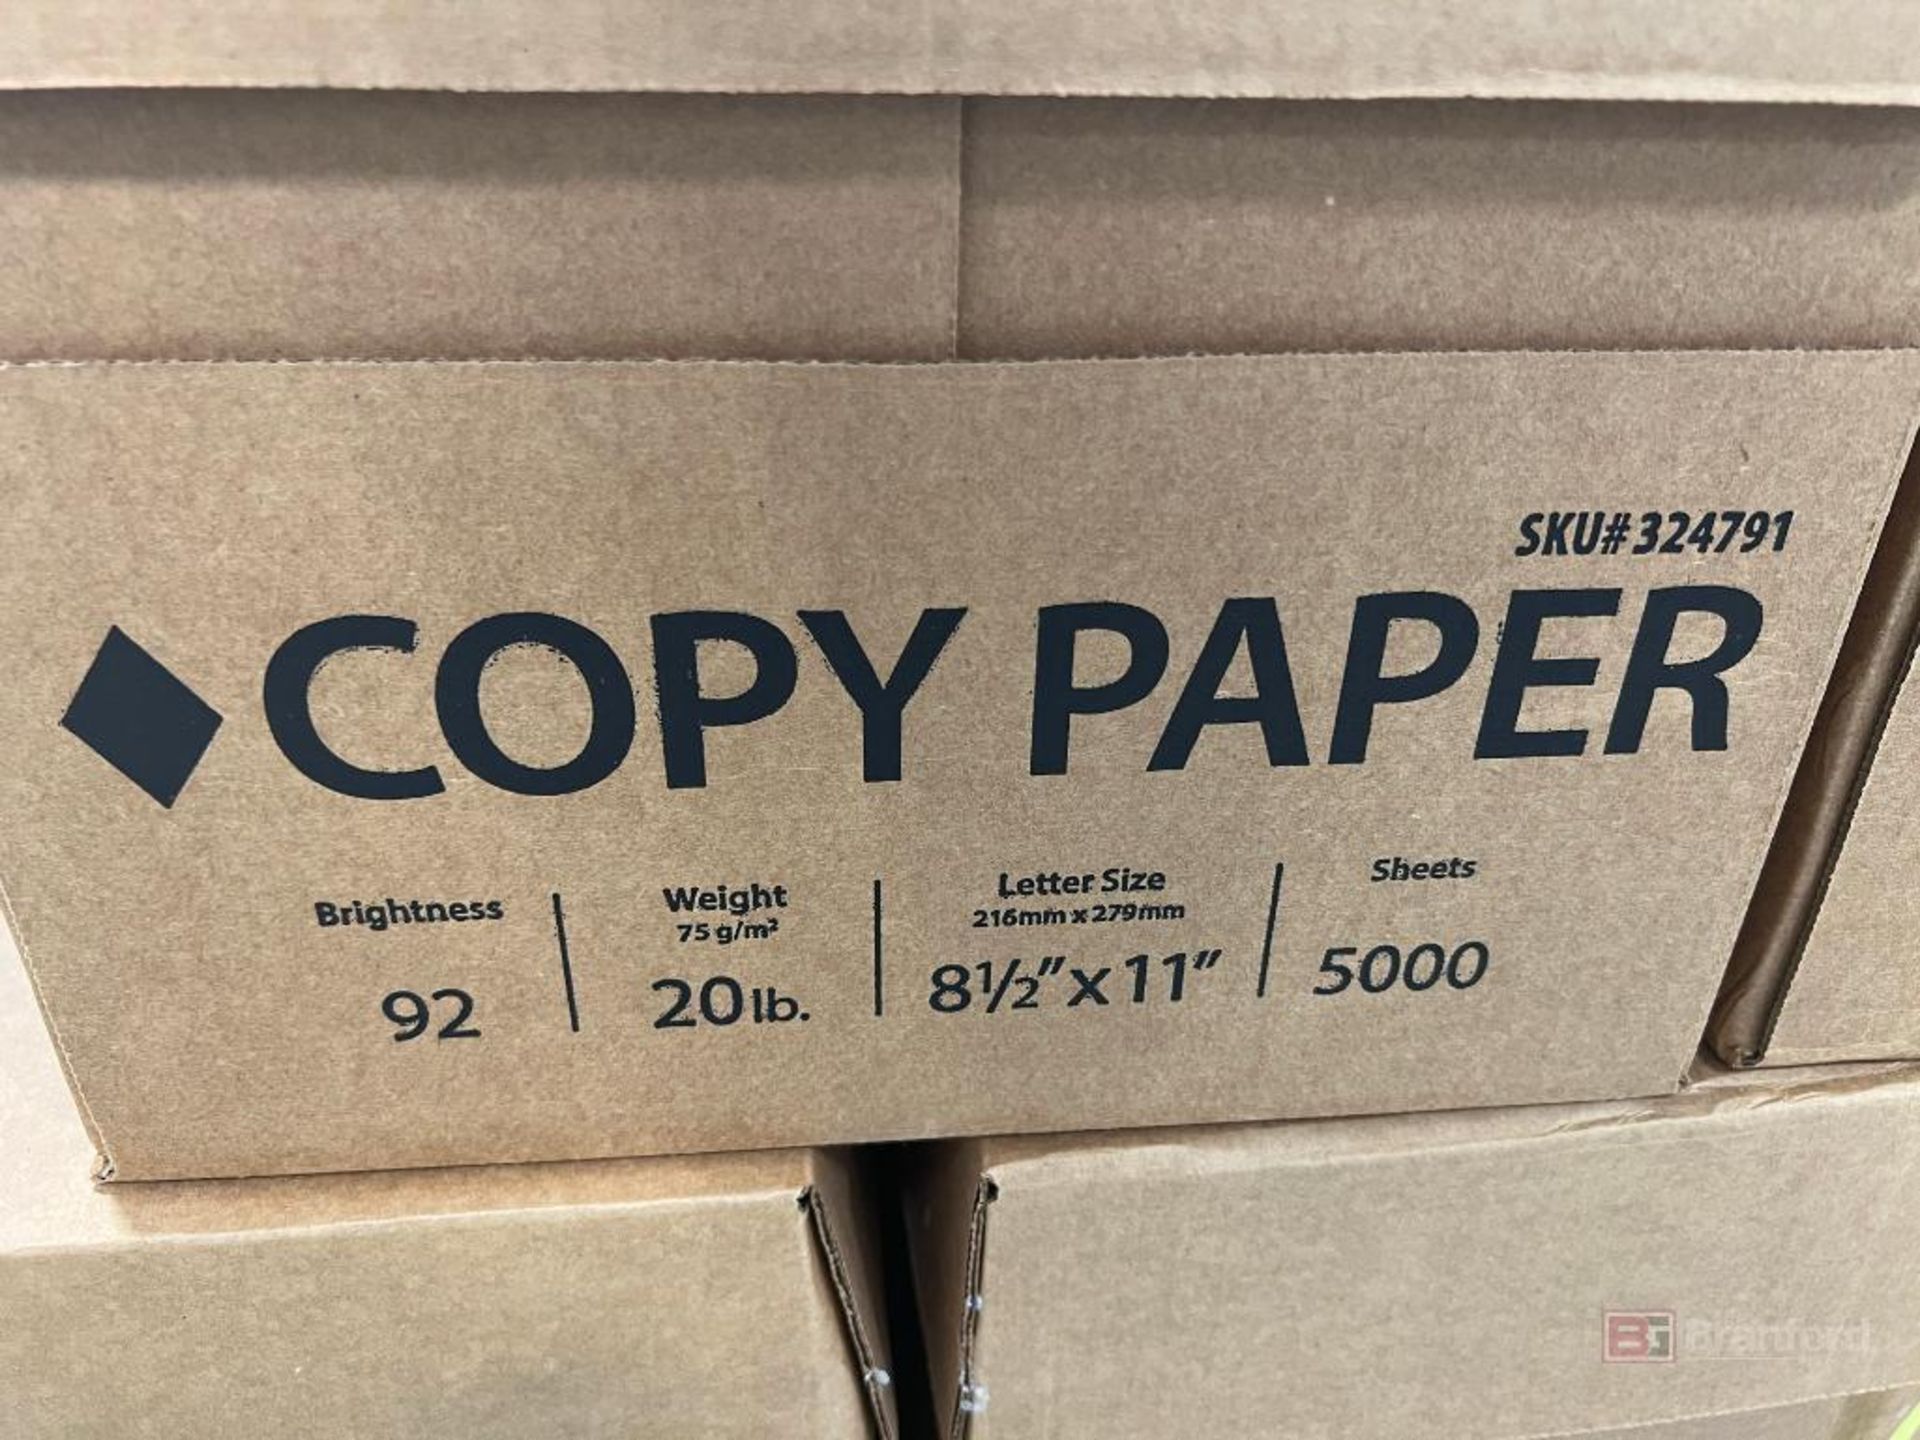 (66) Cases Copy Paper, 8.5 x 11, 5000 sheets per case - Image 3 of 3